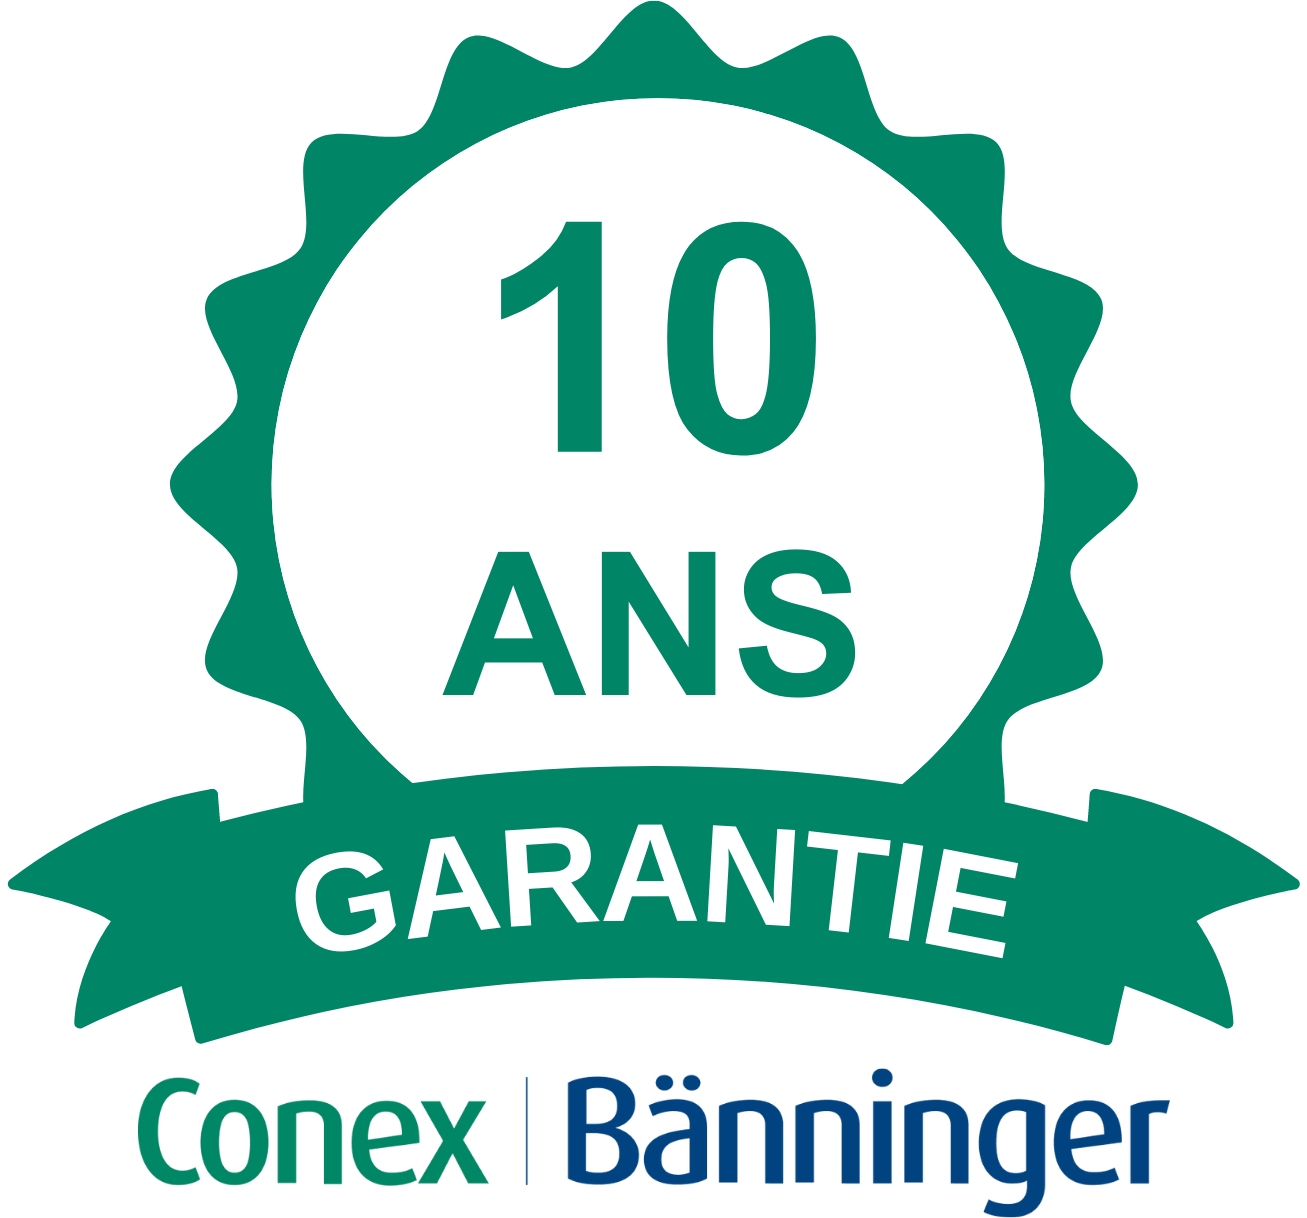 Garantie 10 ans raccords B Maxipro